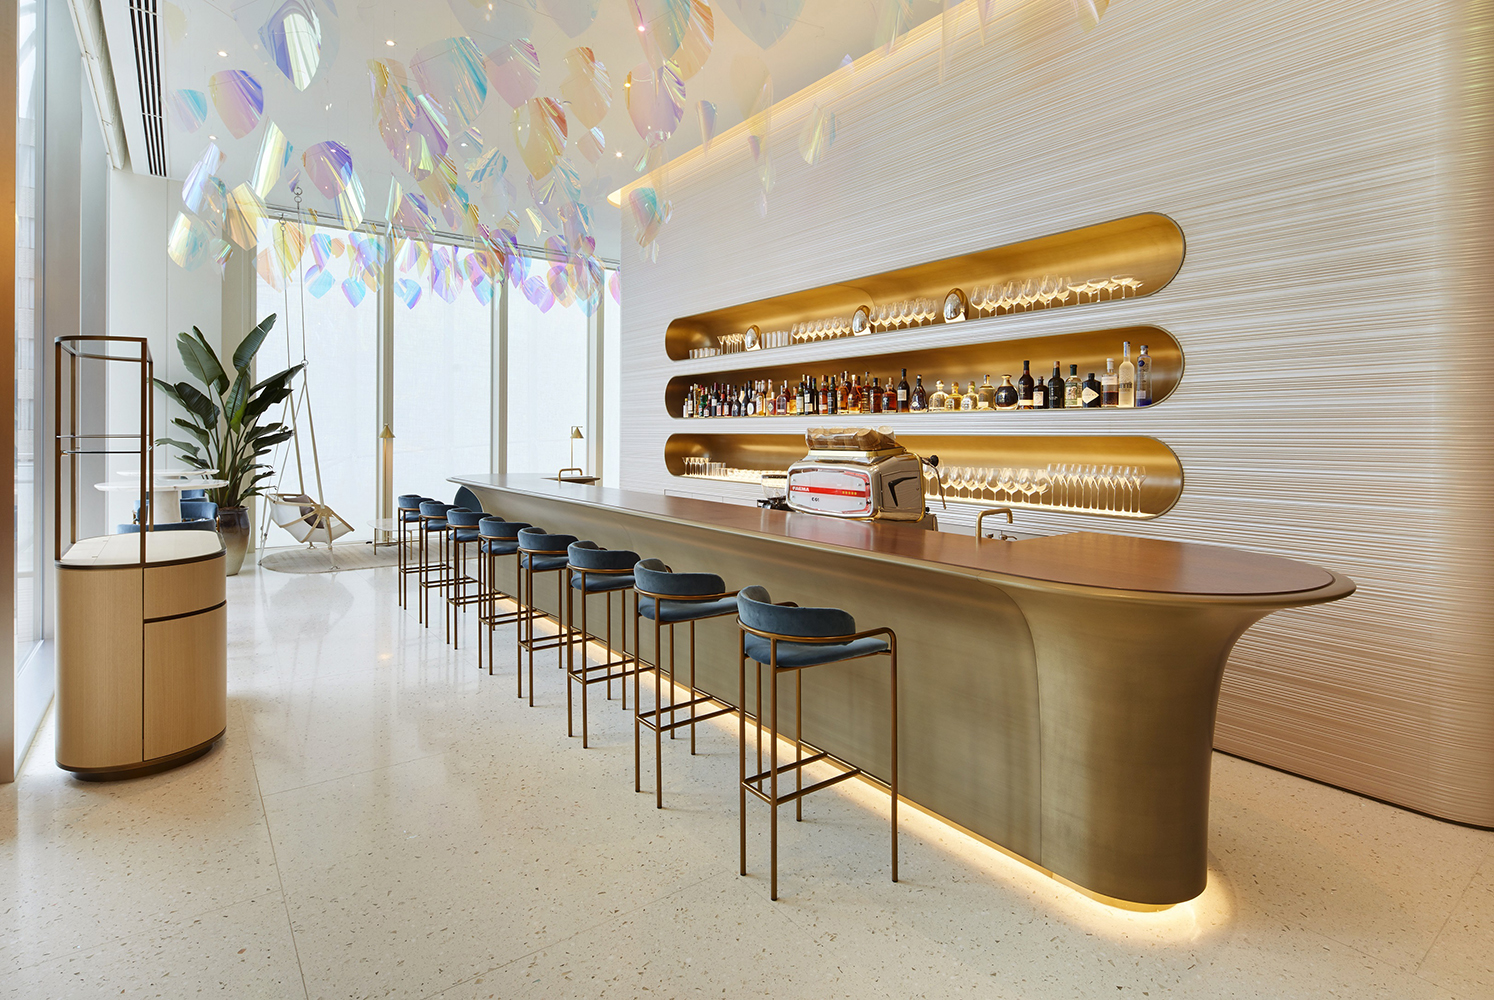 Louis Vuitton celebrates the opening of the Maison Osaka Midosuji